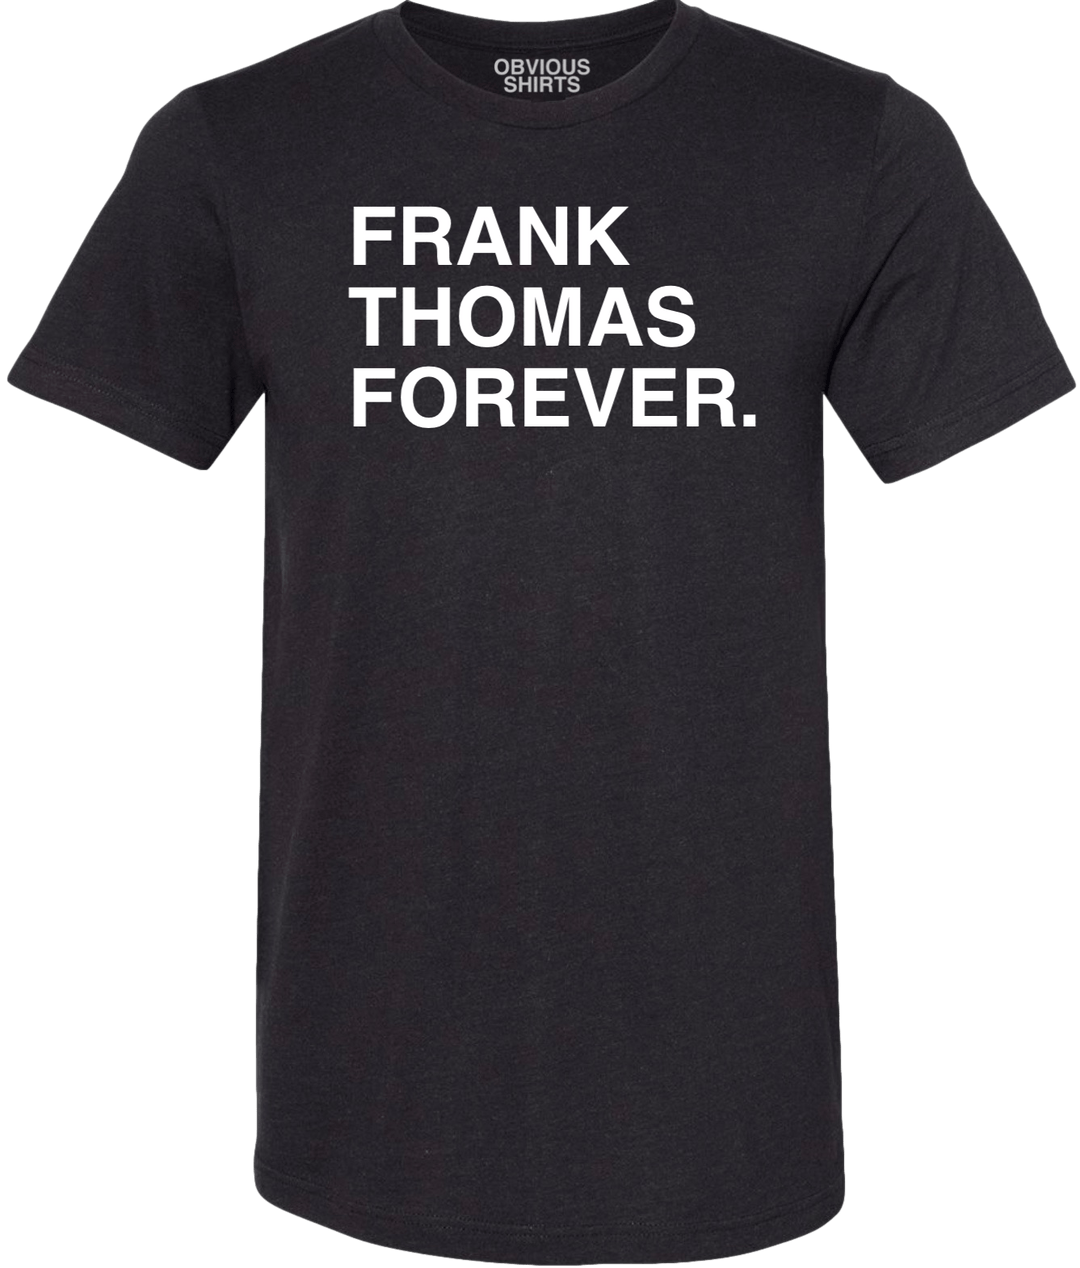 FRANK THOMAS FOREVER. - OBVIOUS SHIRTS